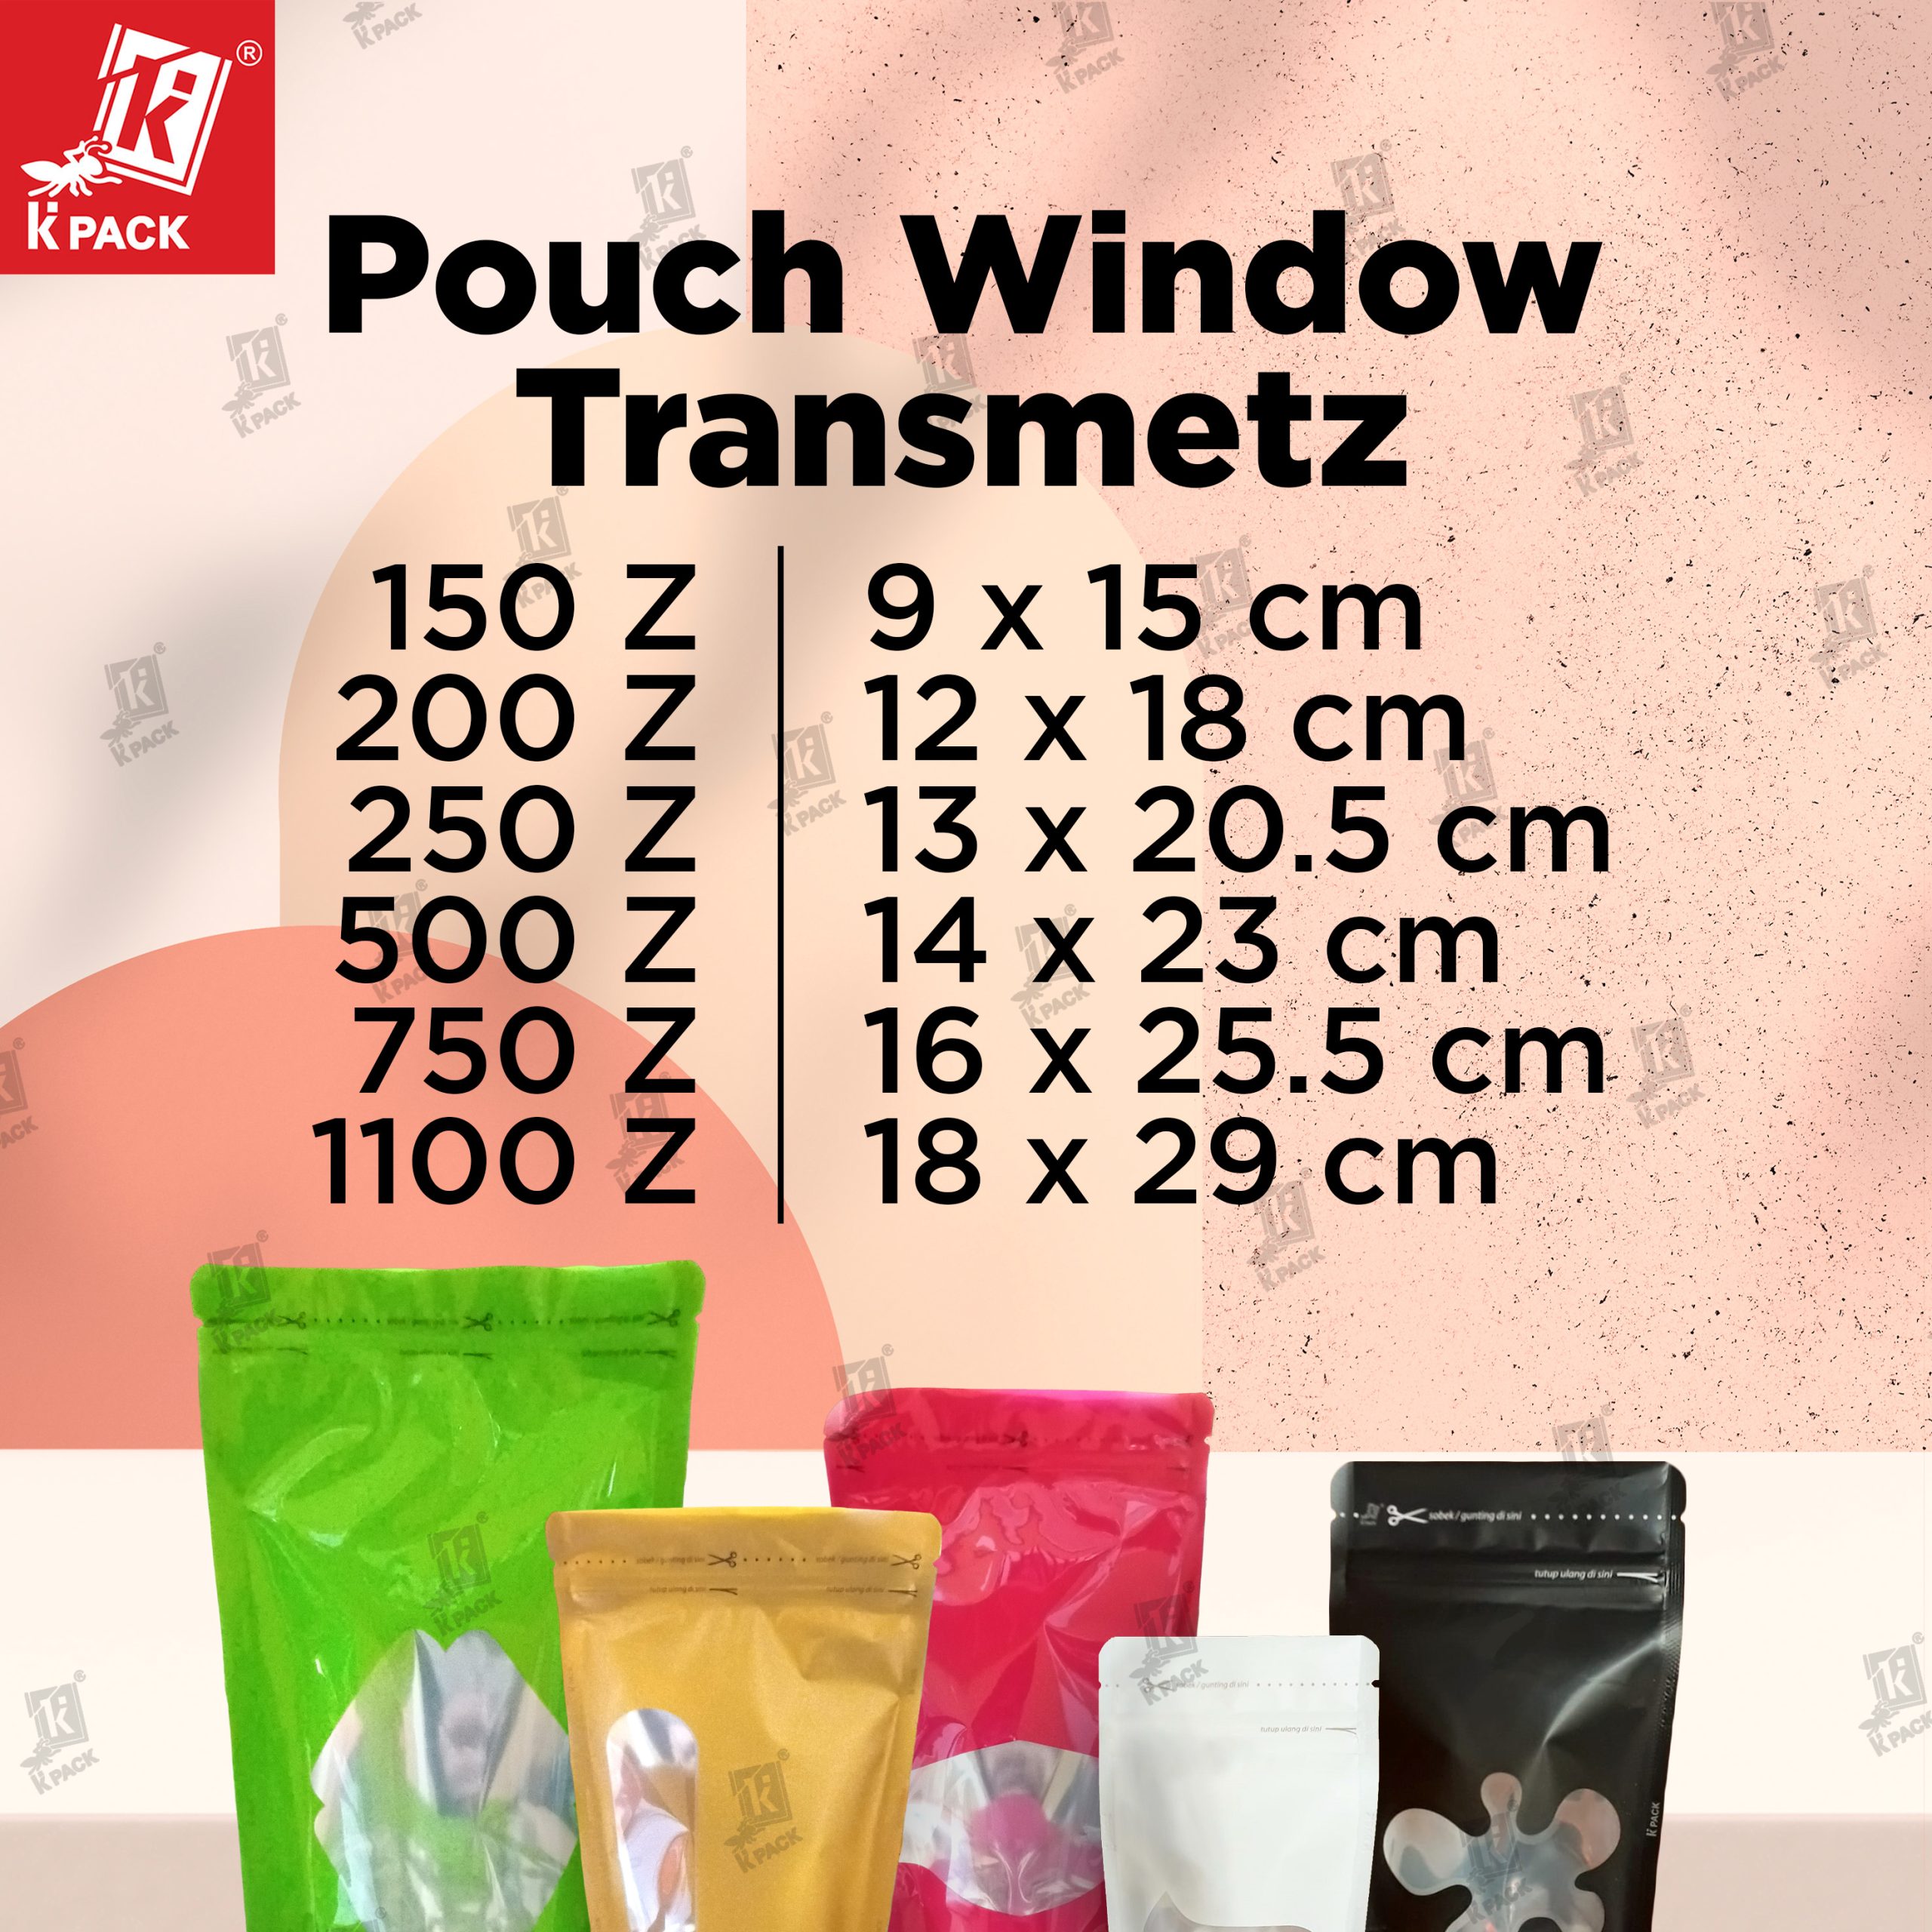 Pouch Window Transmetz ukuran 1.1